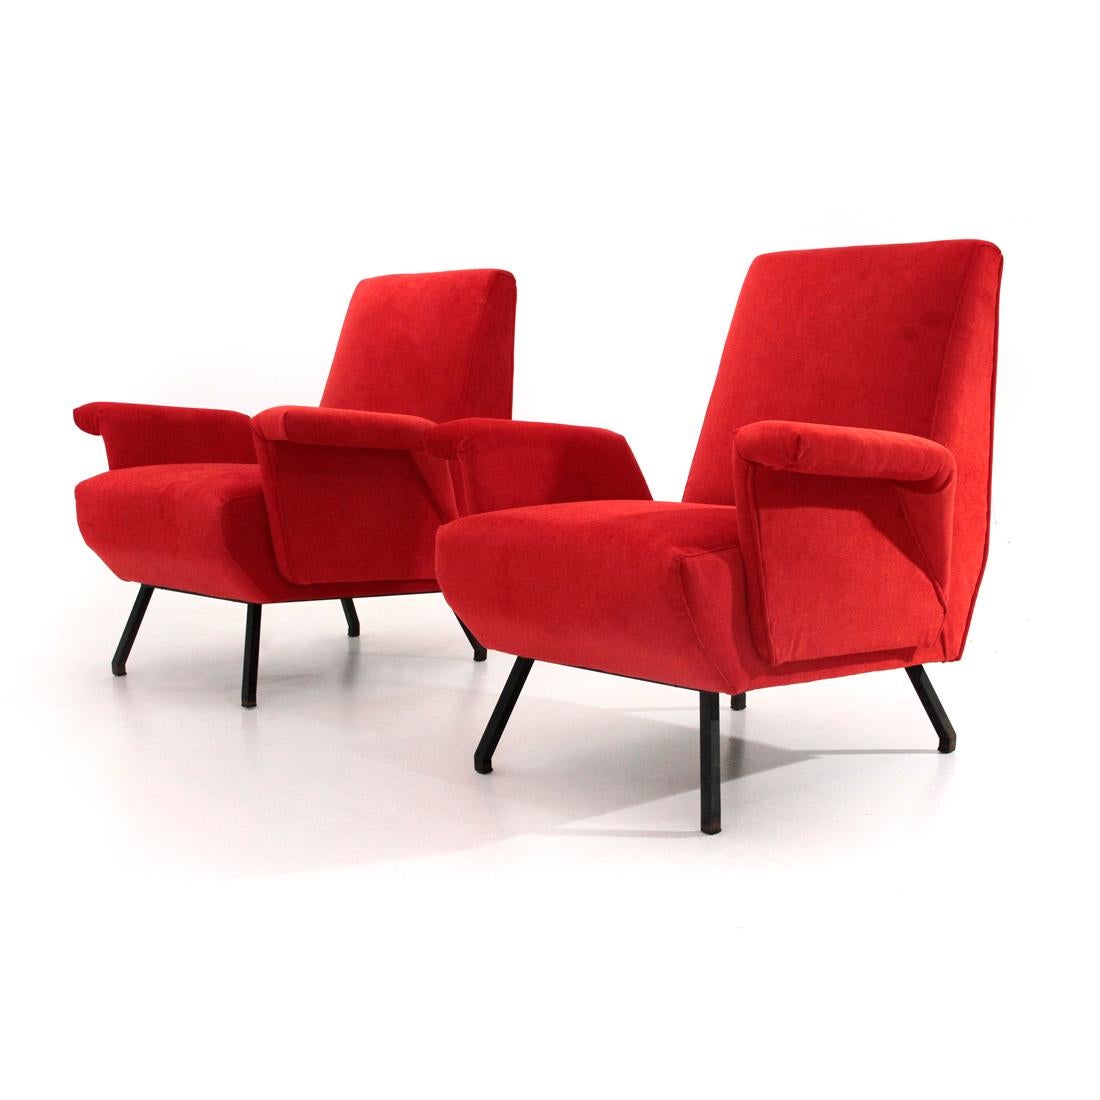 Mid-20th Century Italian Midcentury Red Velvet Armchair, 1950s, Set of 2